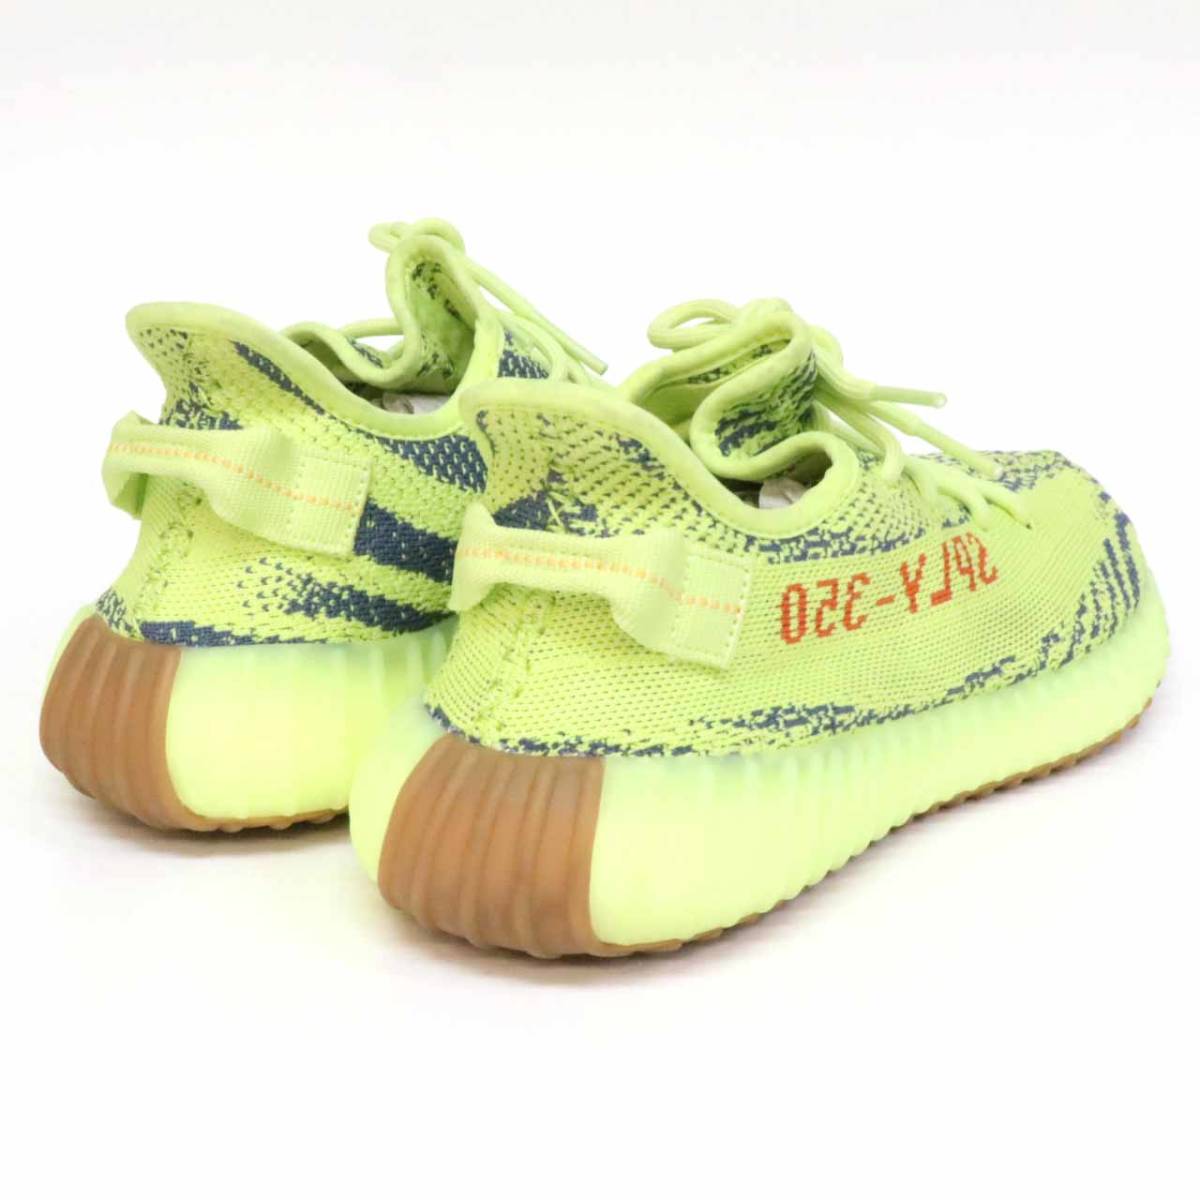 giay-adidas-Yeezy-boost-350-v2-chinh-hang-tai-tphcm-B37572-king-shoes-sneaker-tan-binh